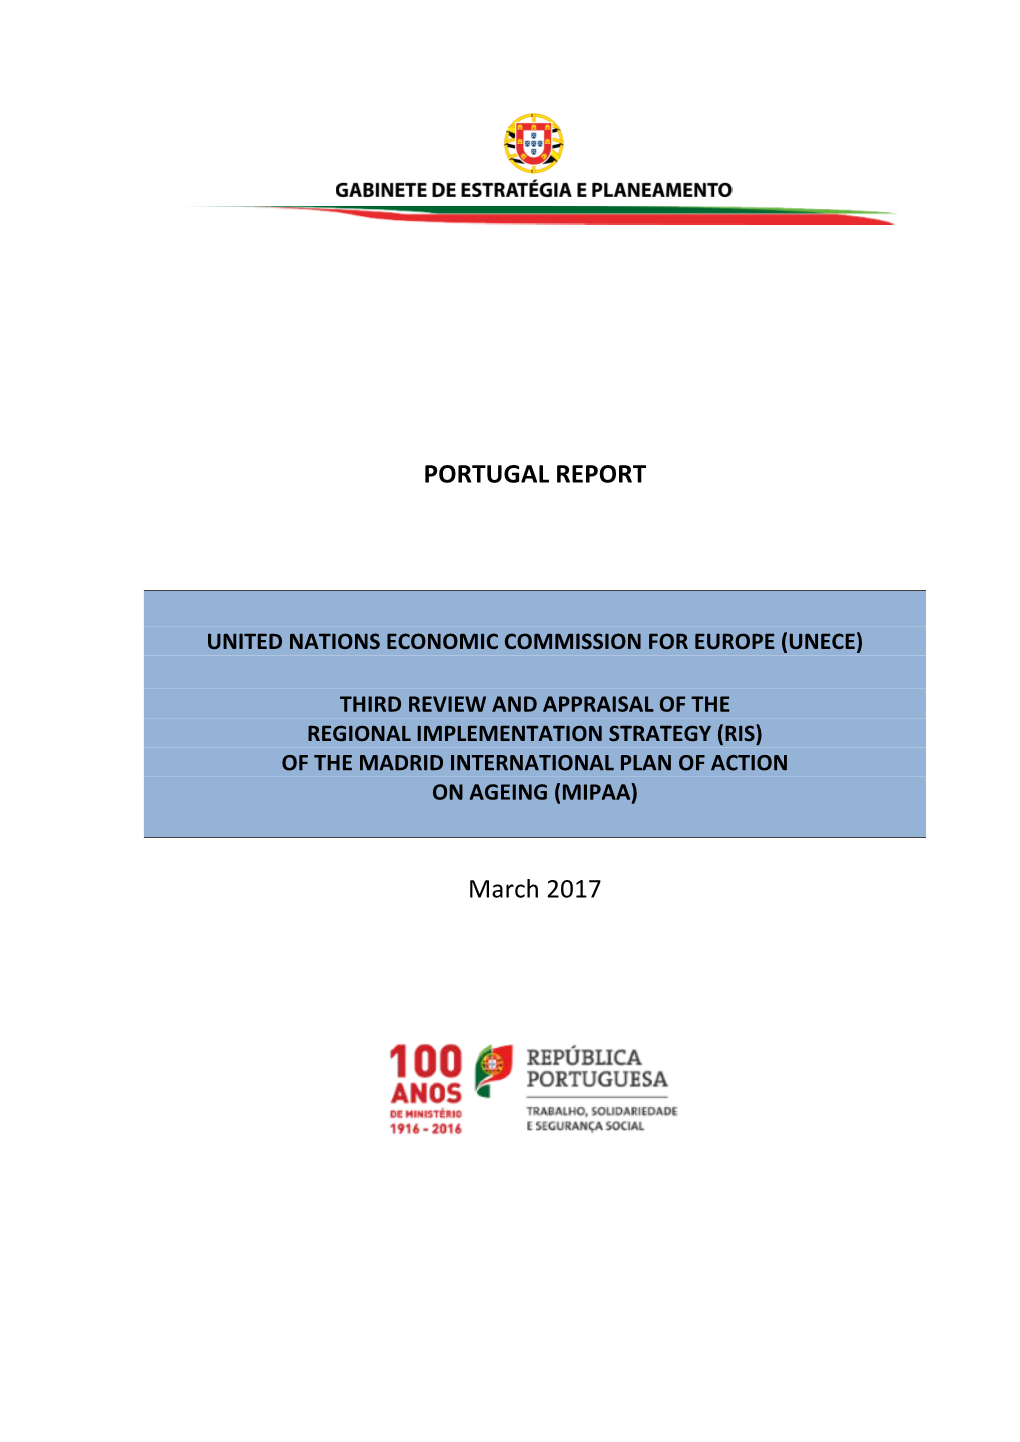 PORTUGAL REPORT March 2017